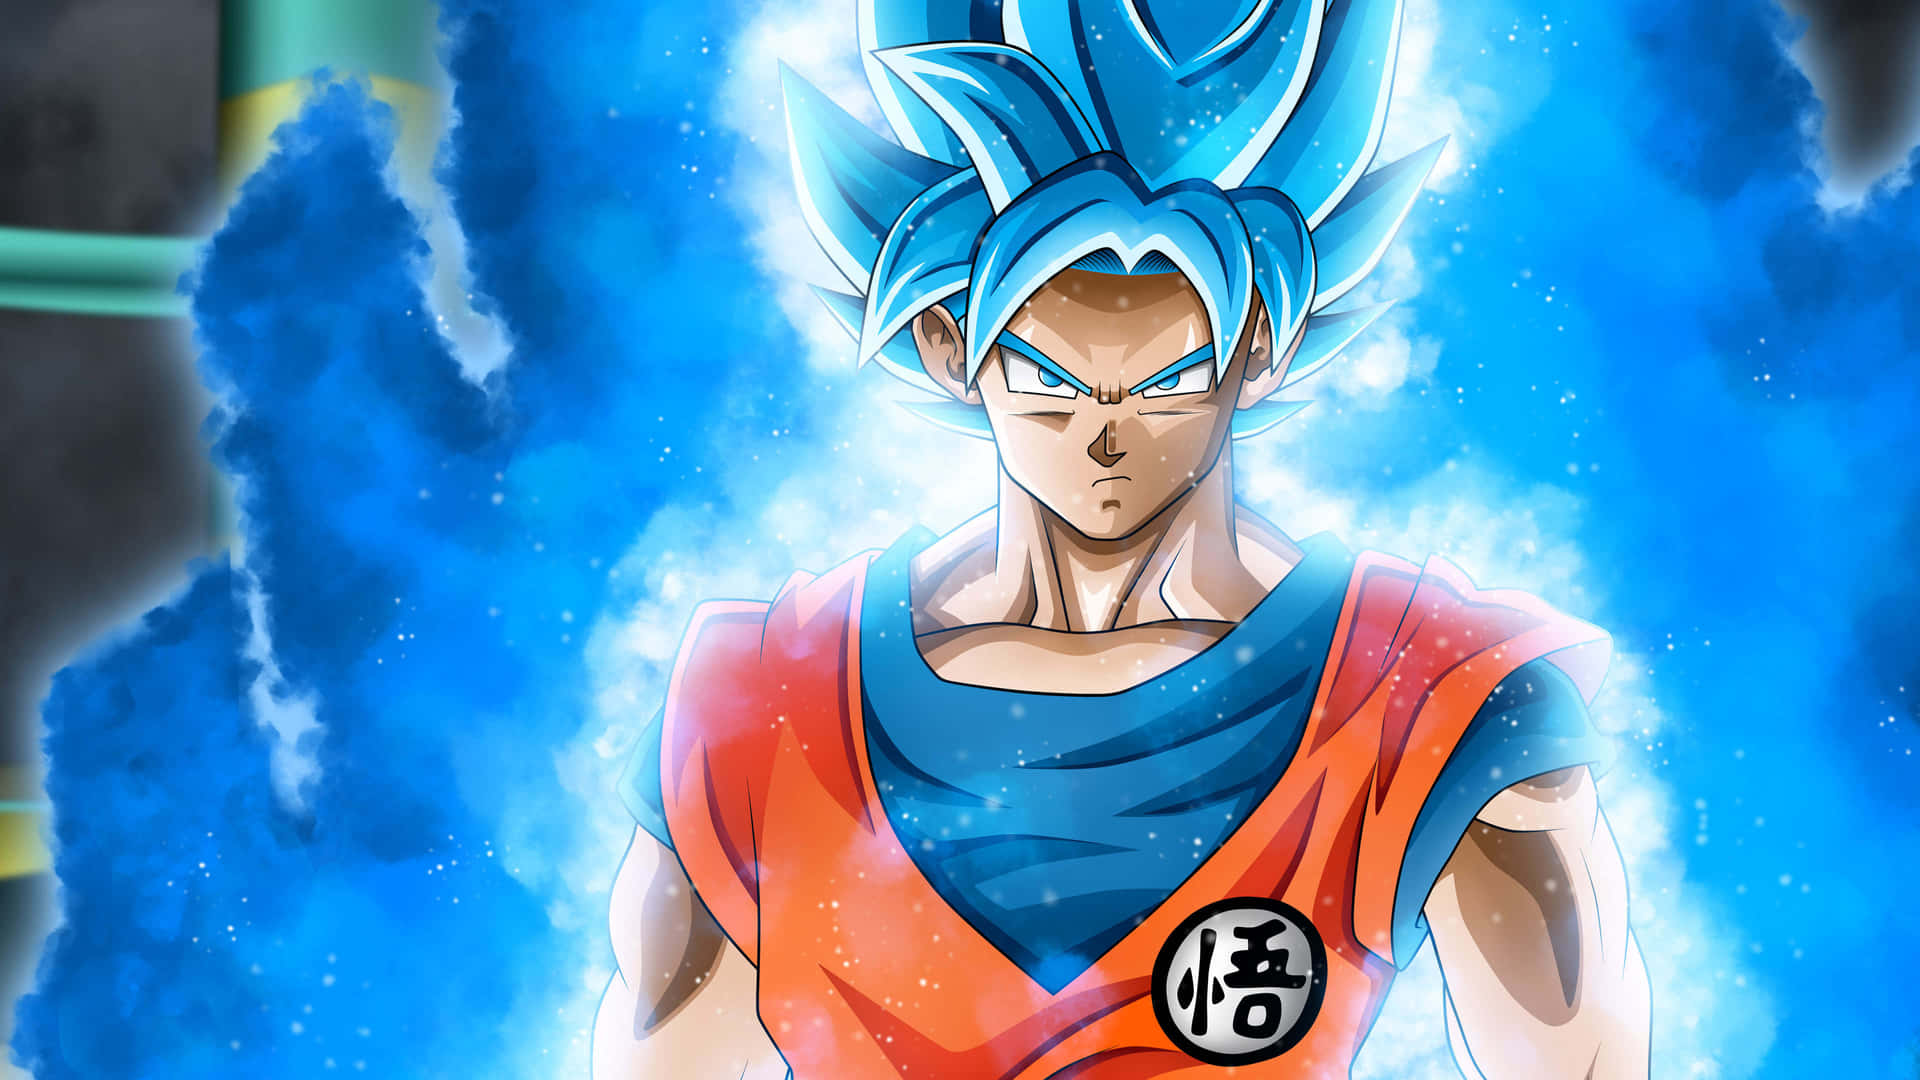 Goku Blue Flame Dragon Ball Super Picture